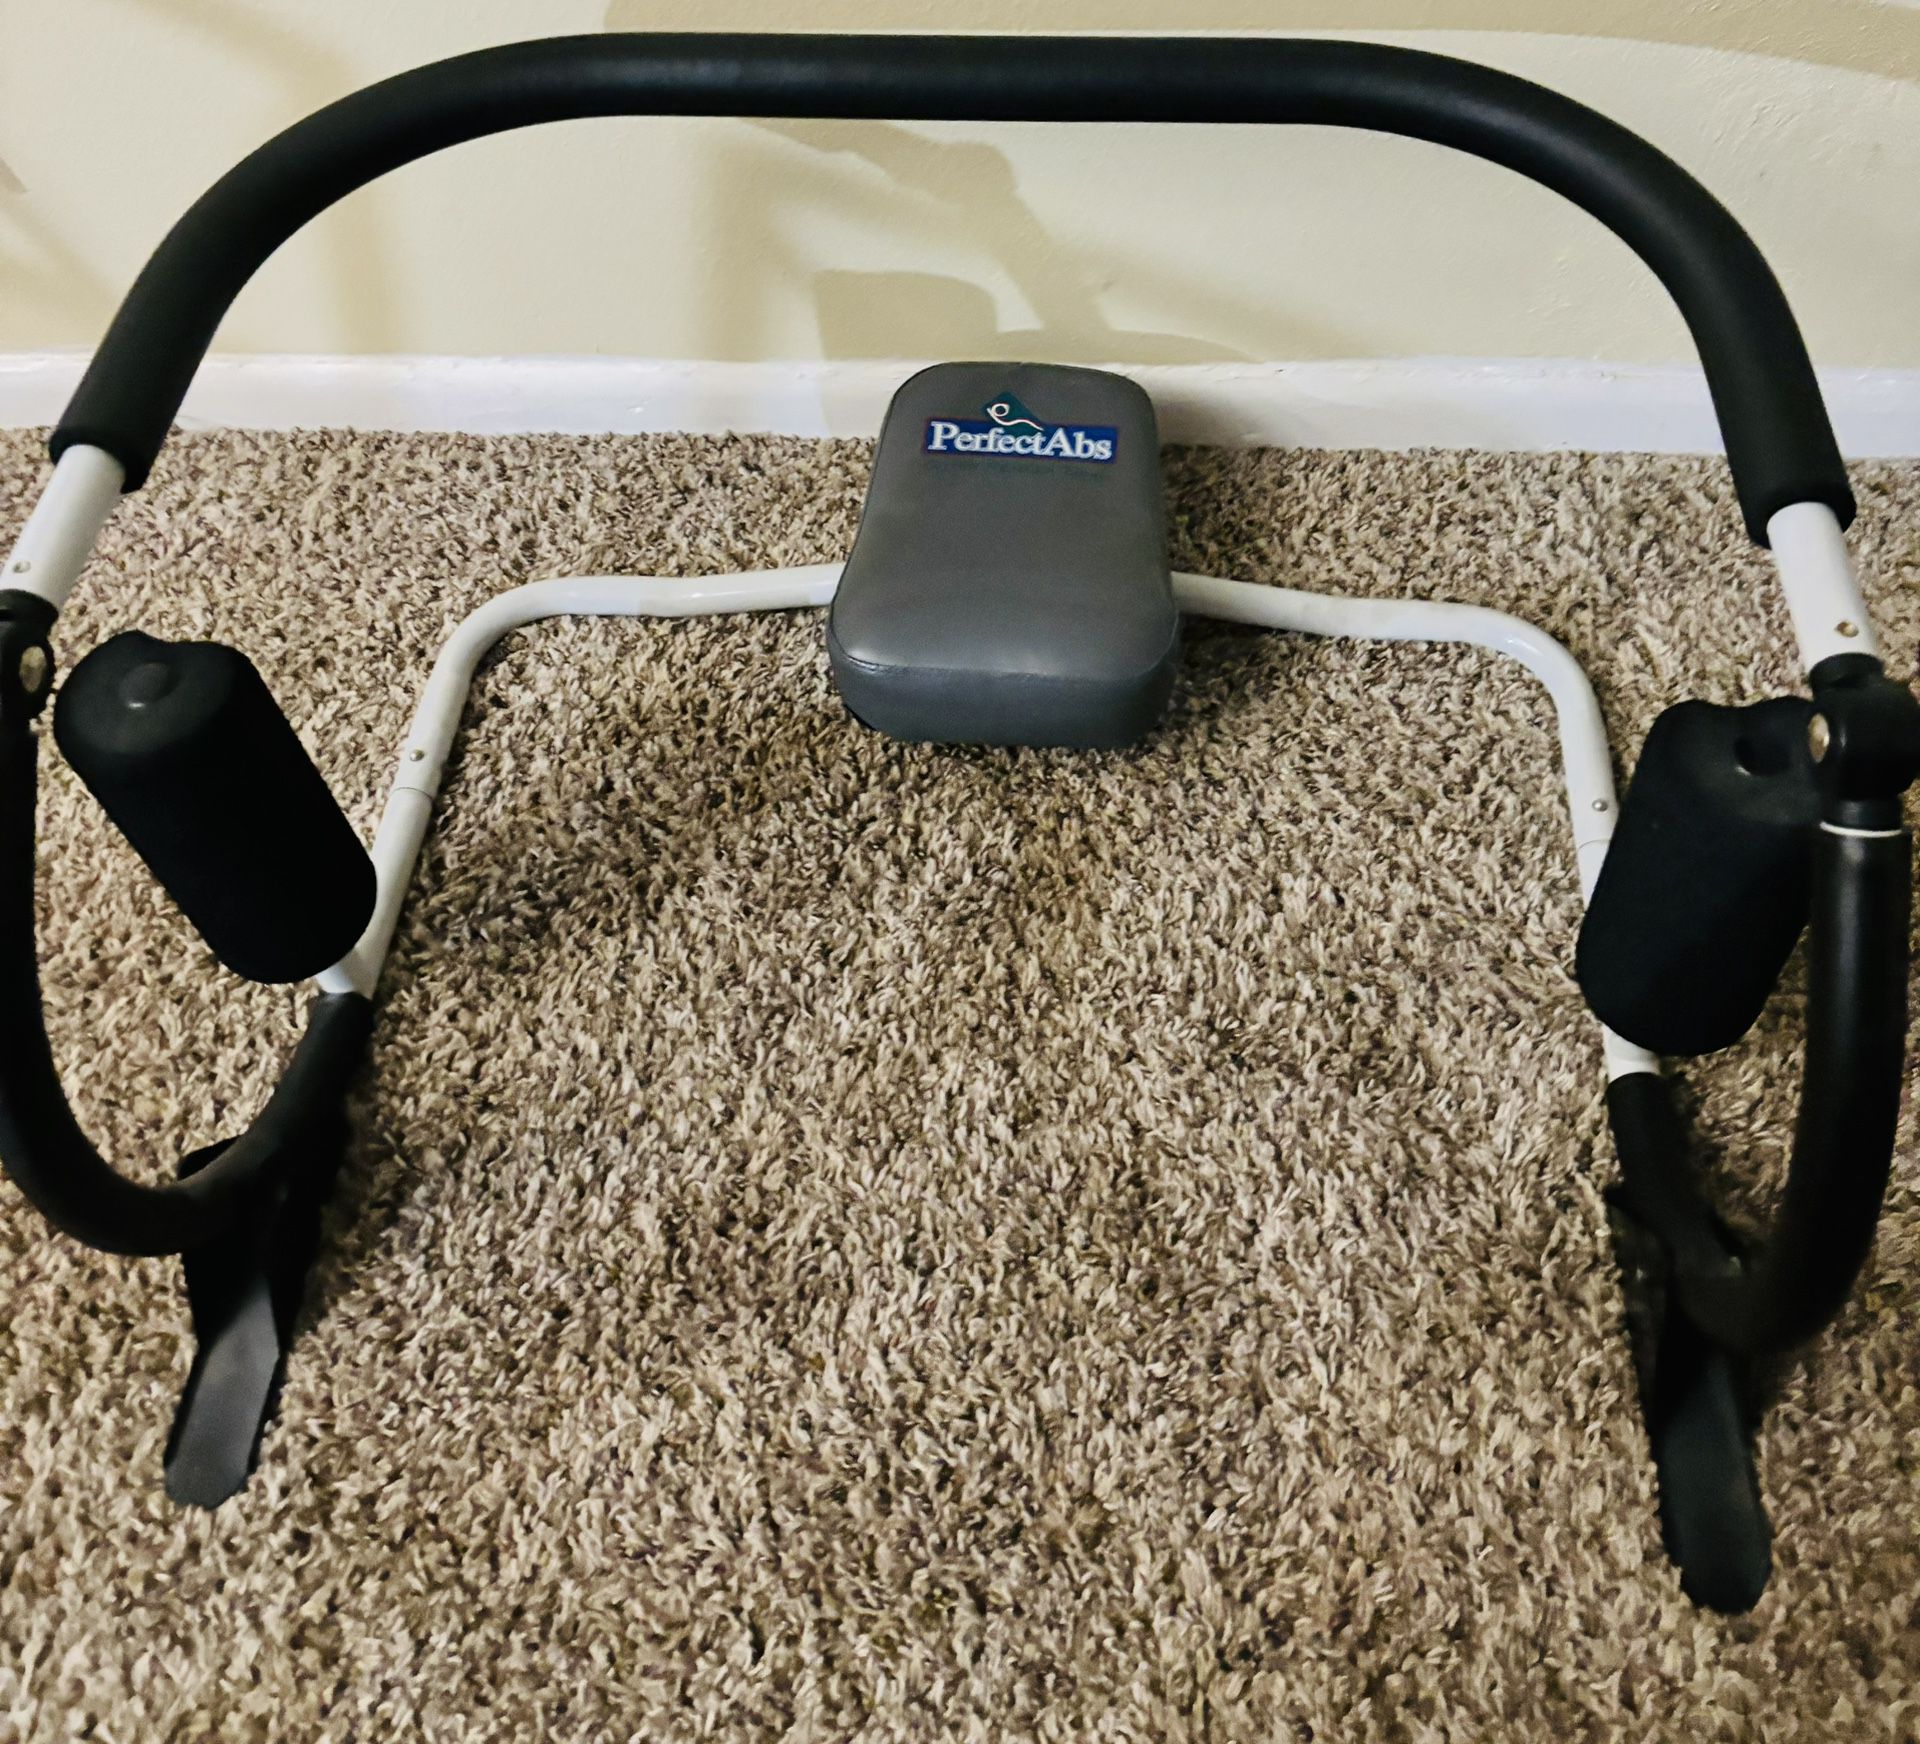 exercise equipment - Ab Roller